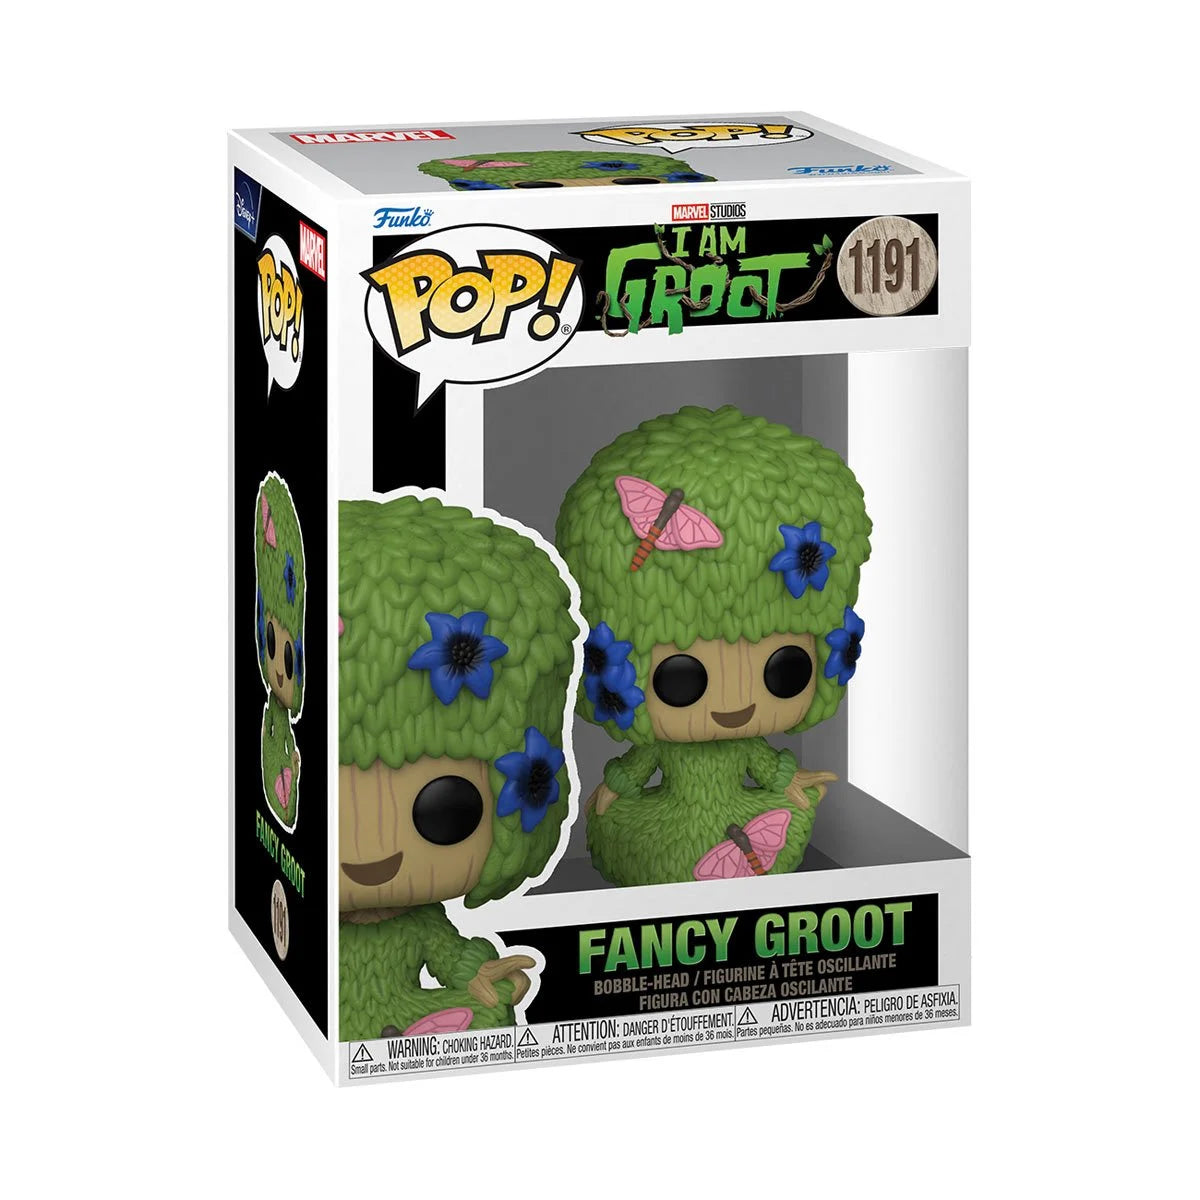 Funko Pop! I Am Groot Fancy Groot Pop! Vinyl Figure